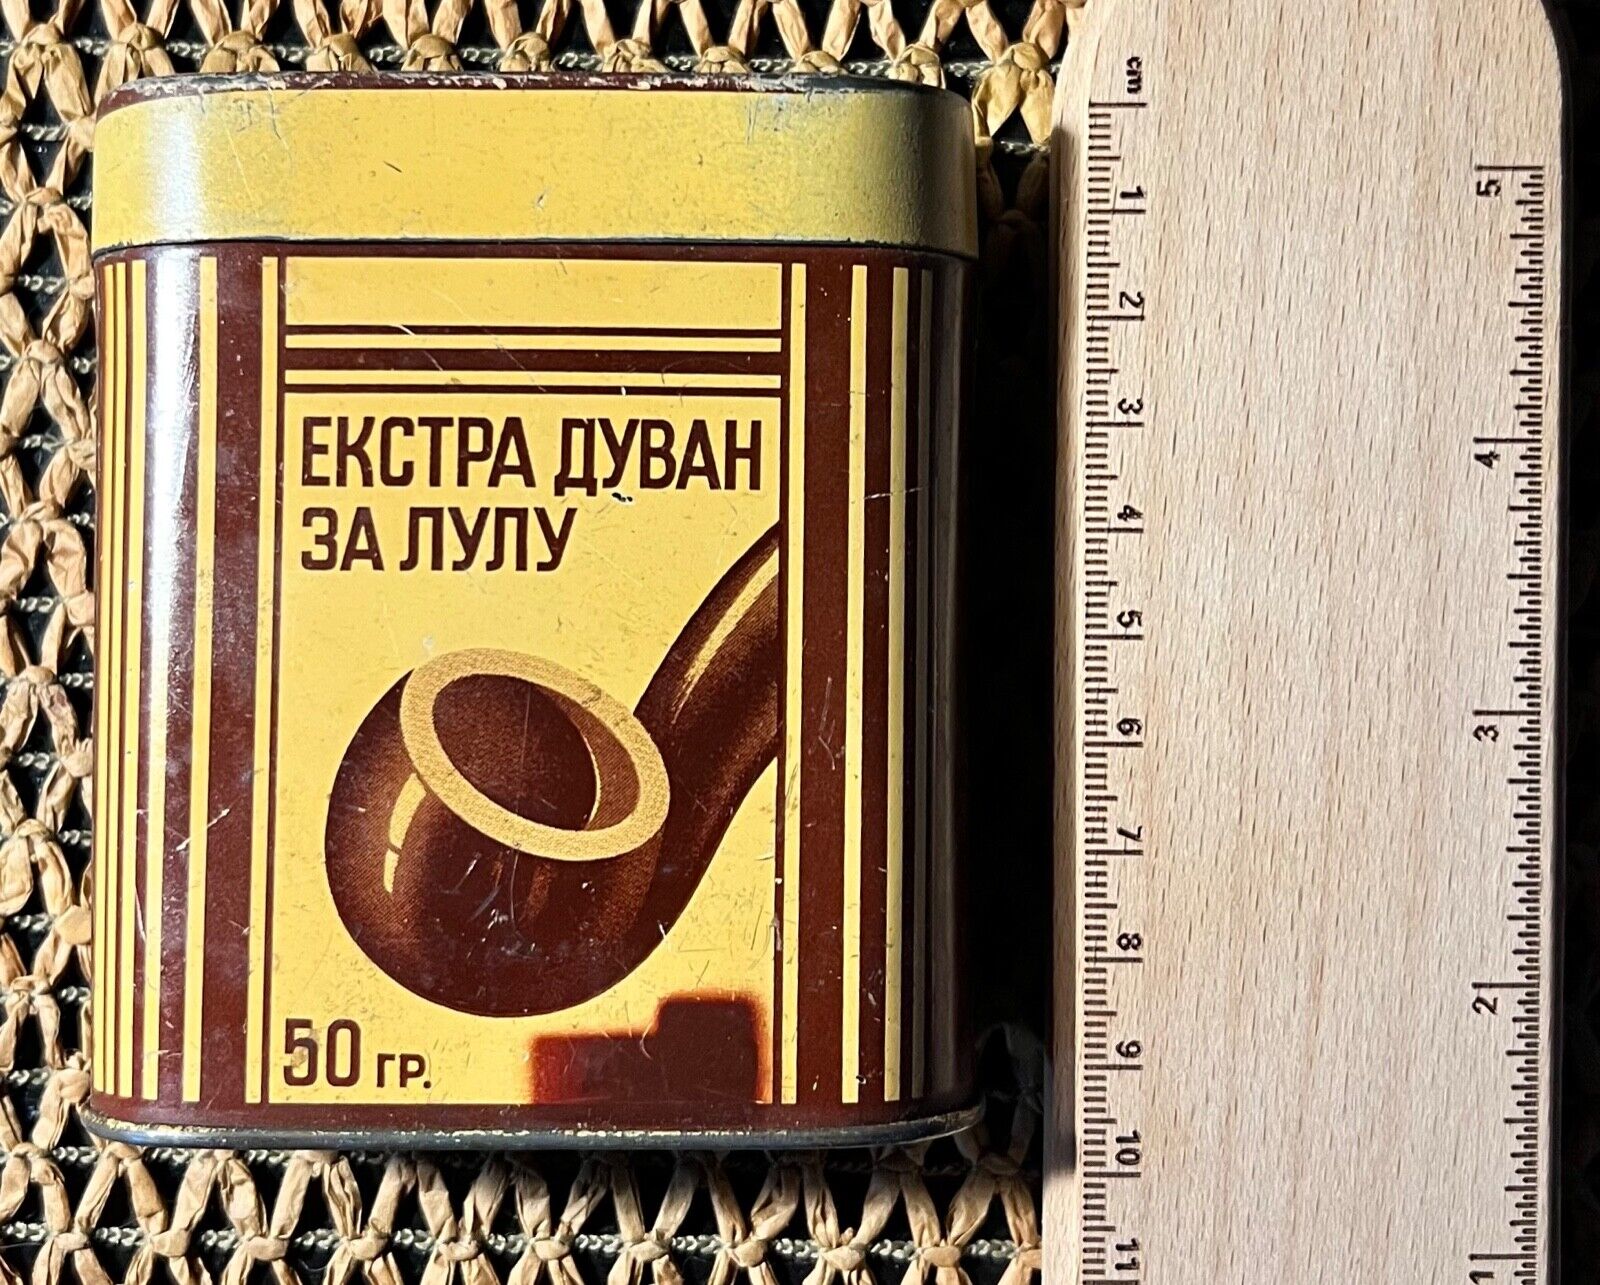 metal  tobacco box pipe tobacco KY Kingdom of Yugoslavia